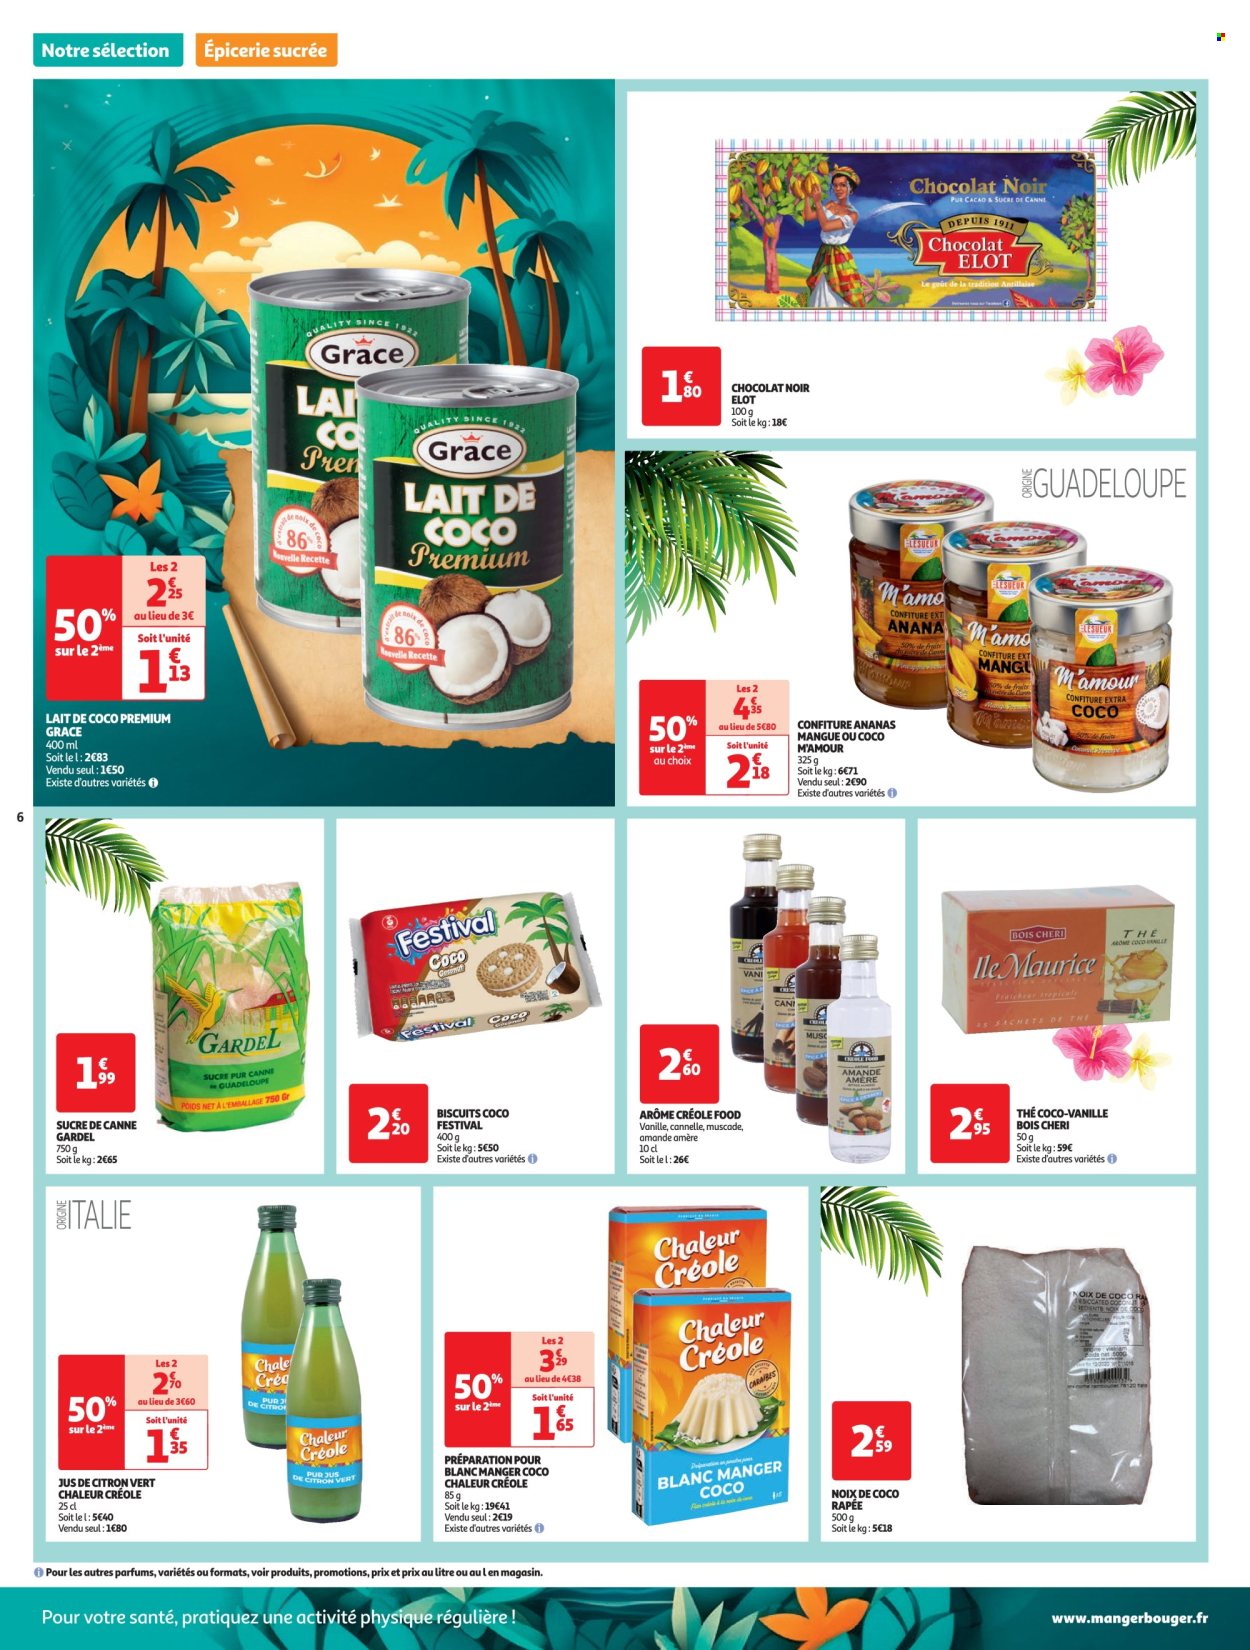 Catalogue Auchan - 23.01.2024 - 29.01.2024. 